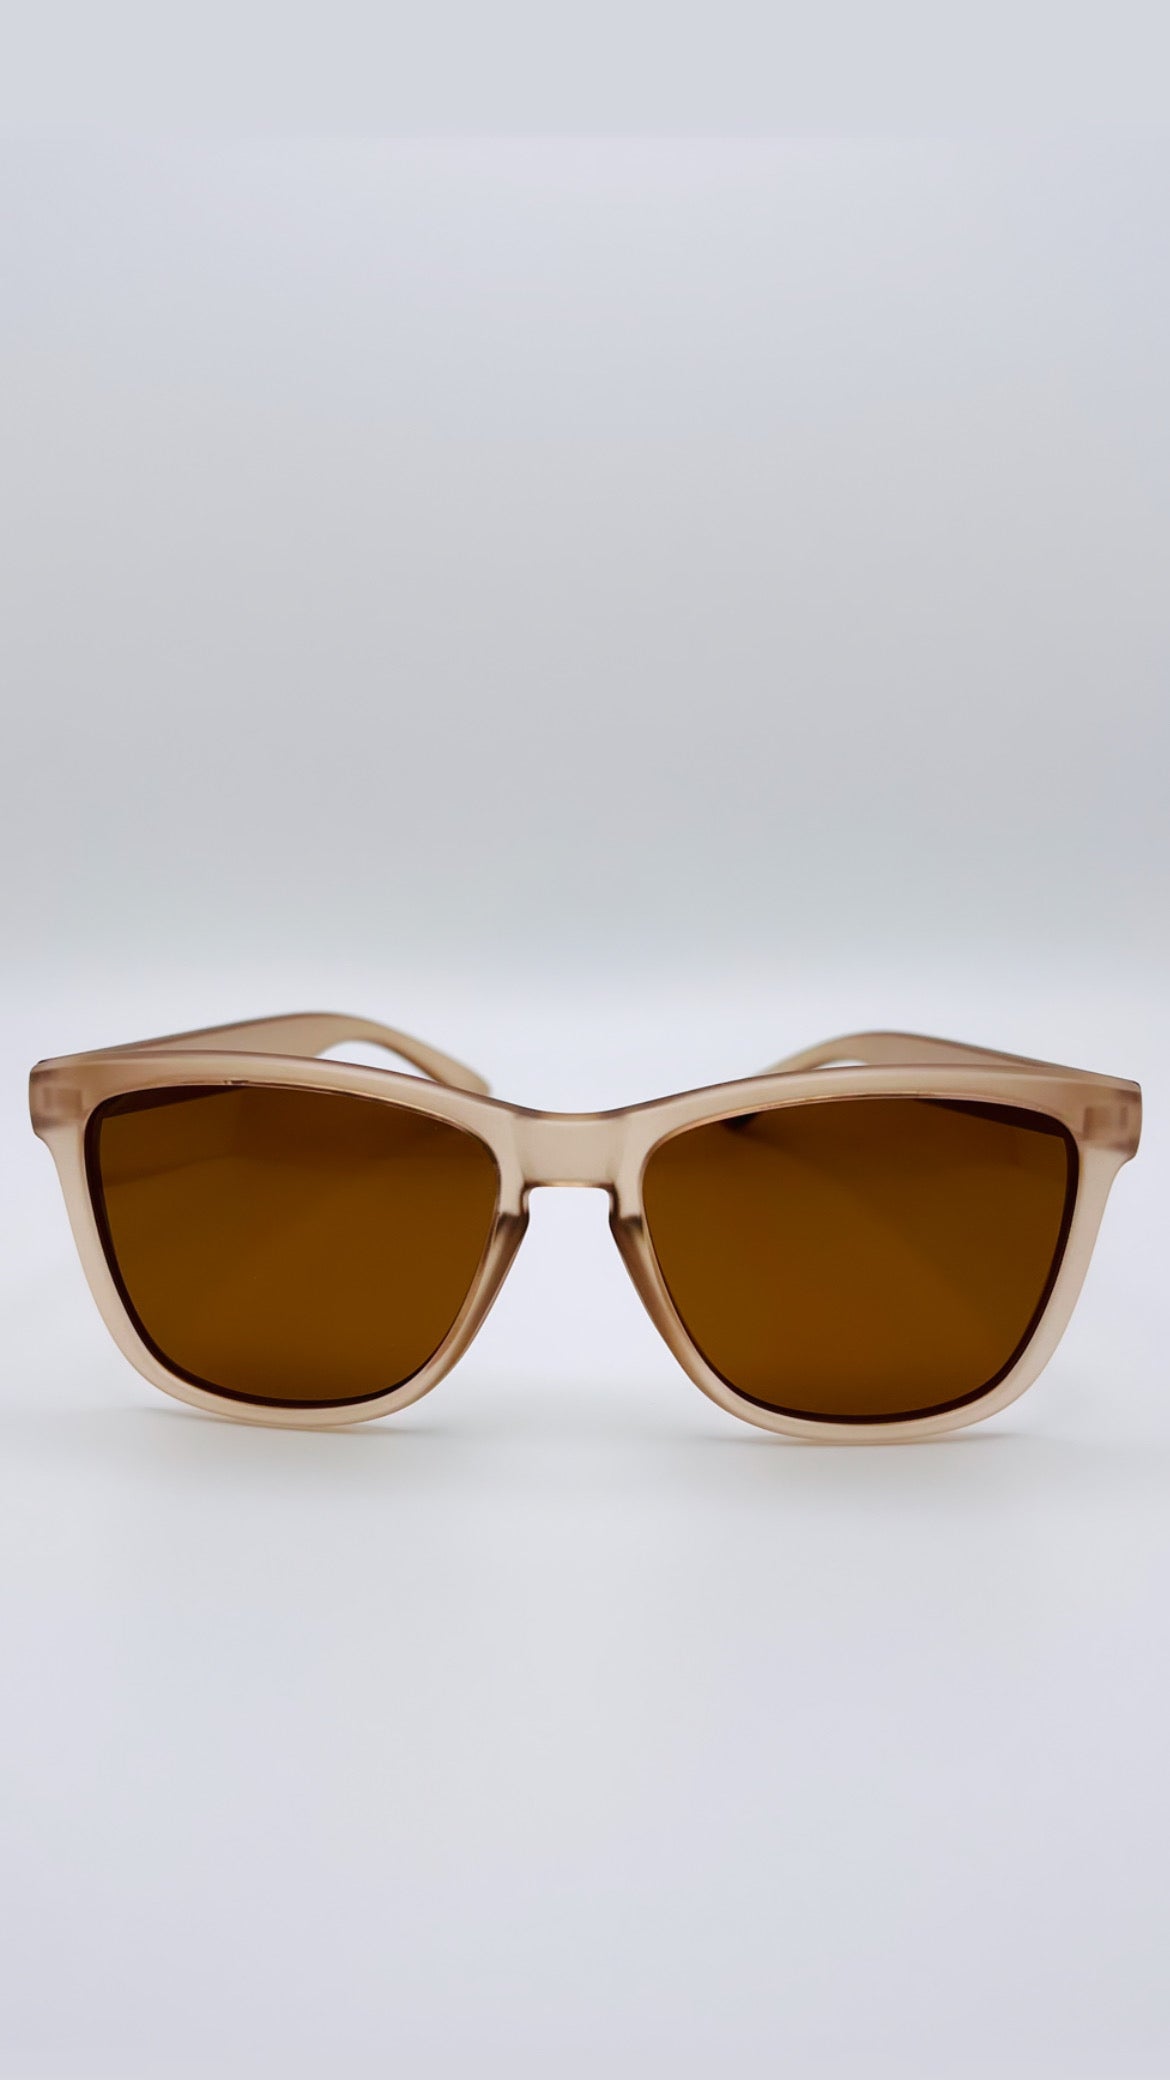 "SEPIA" Sunglasses